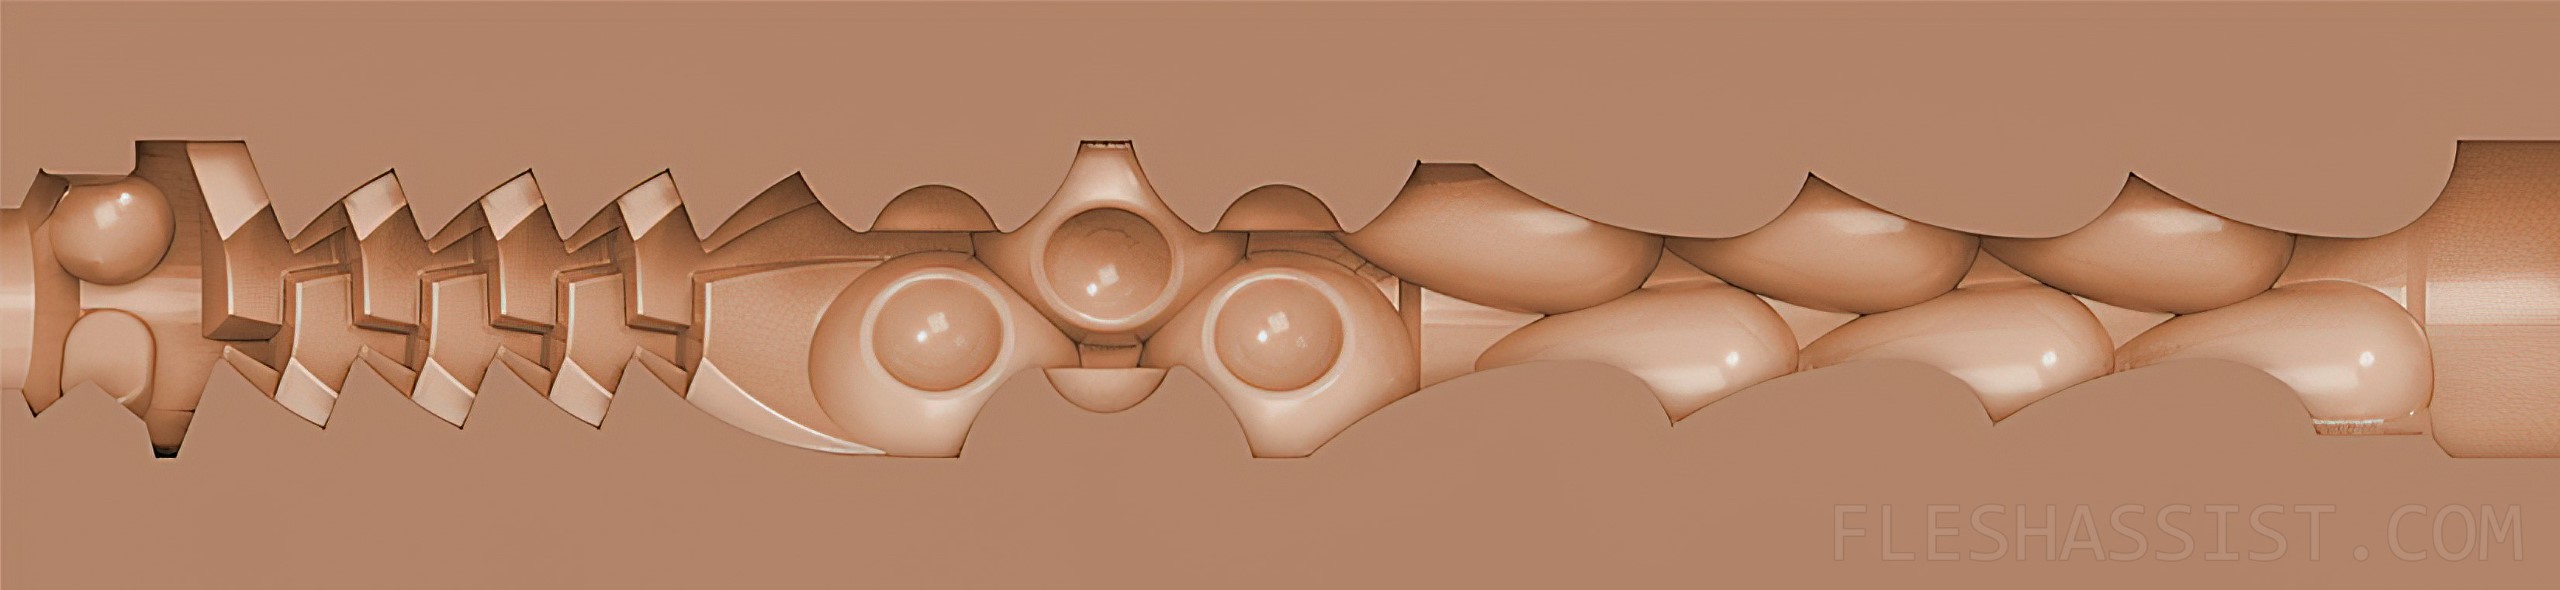 Peaches Fleshlight Girls Texture Image